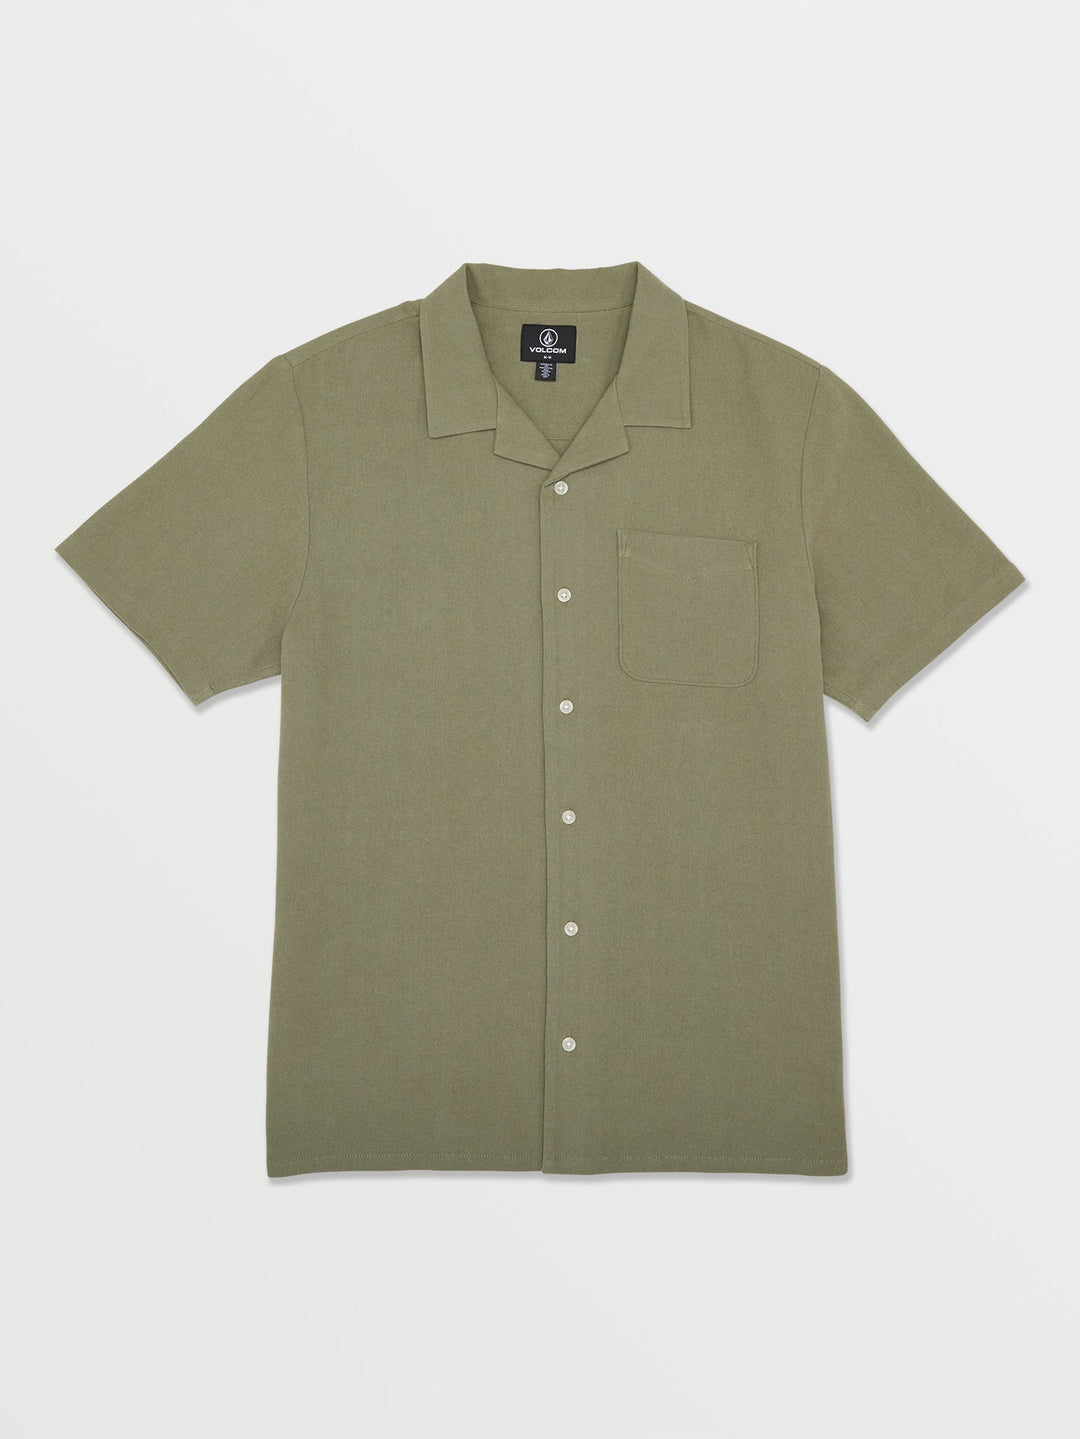 Hobarstone Short Sleeve Shirt - Army Green Combo - Sun Diego Boardshop